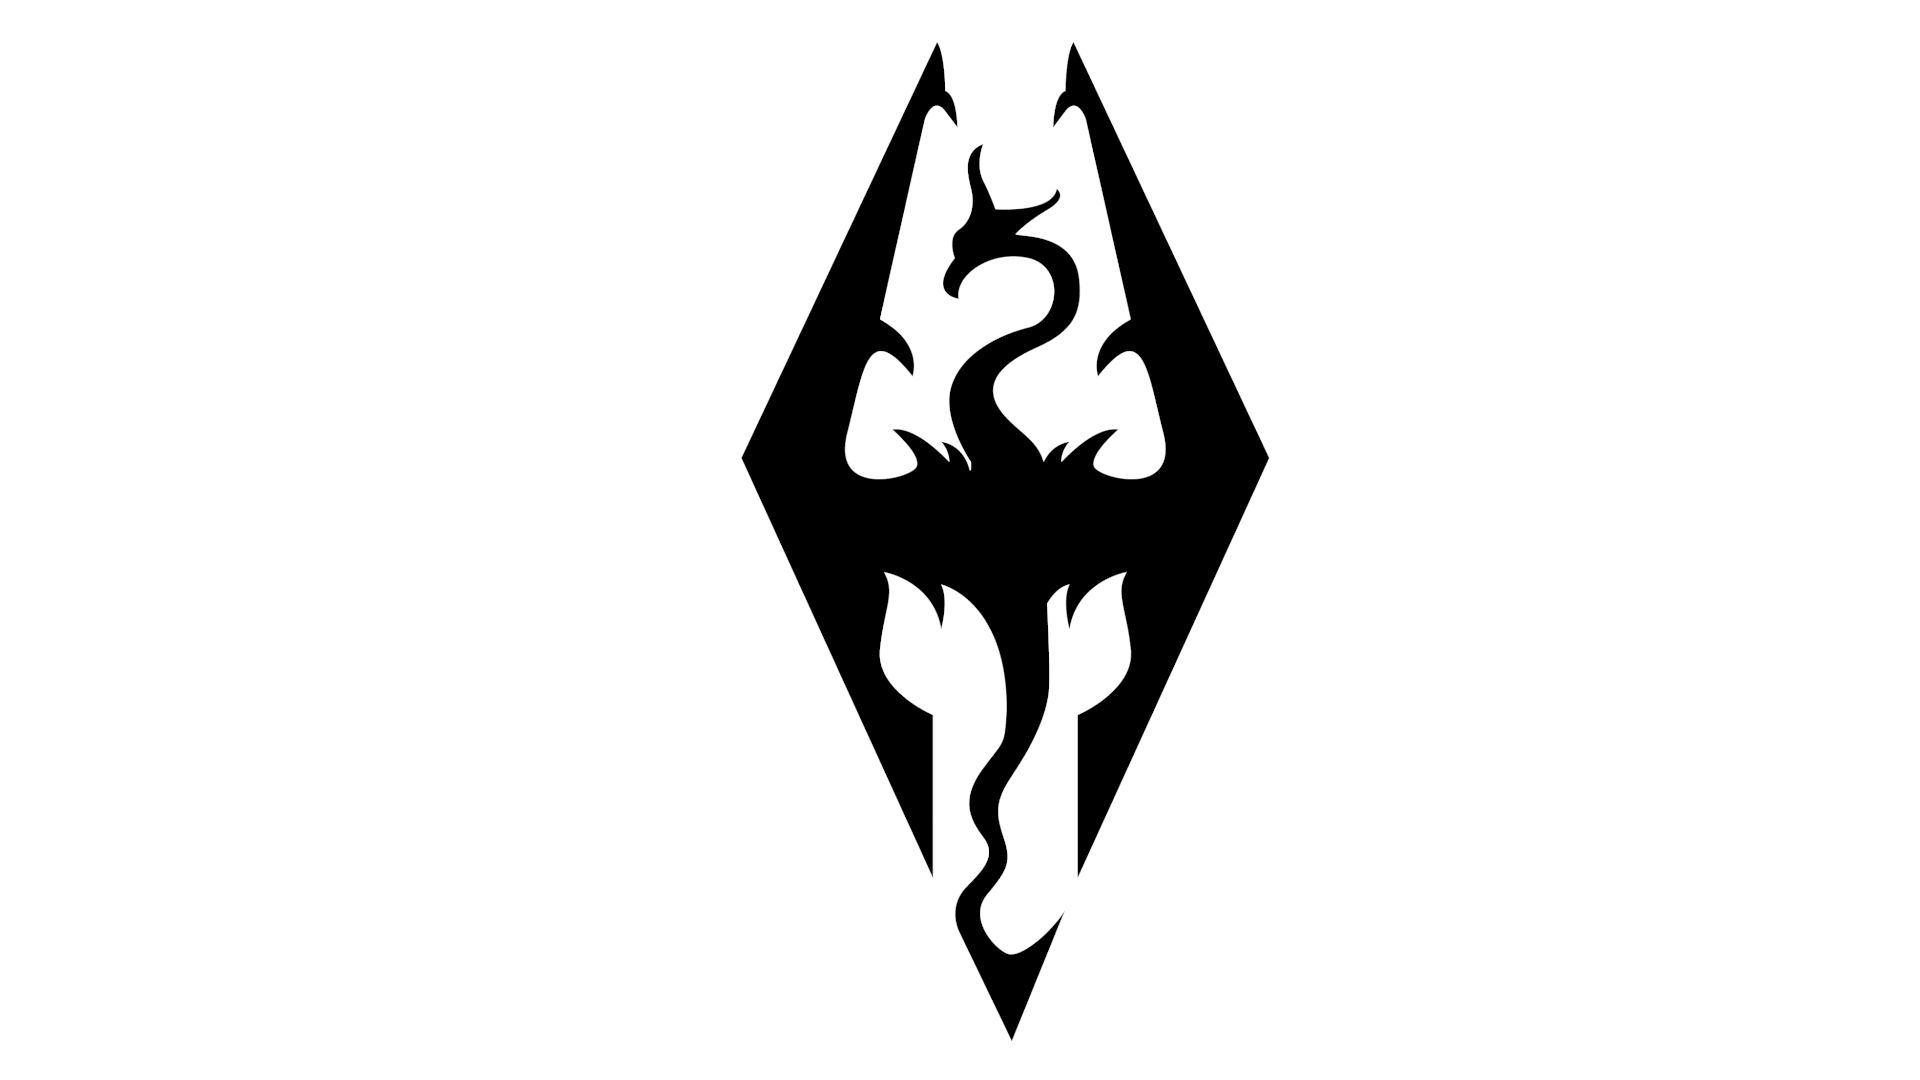 skyrim symbol black and white